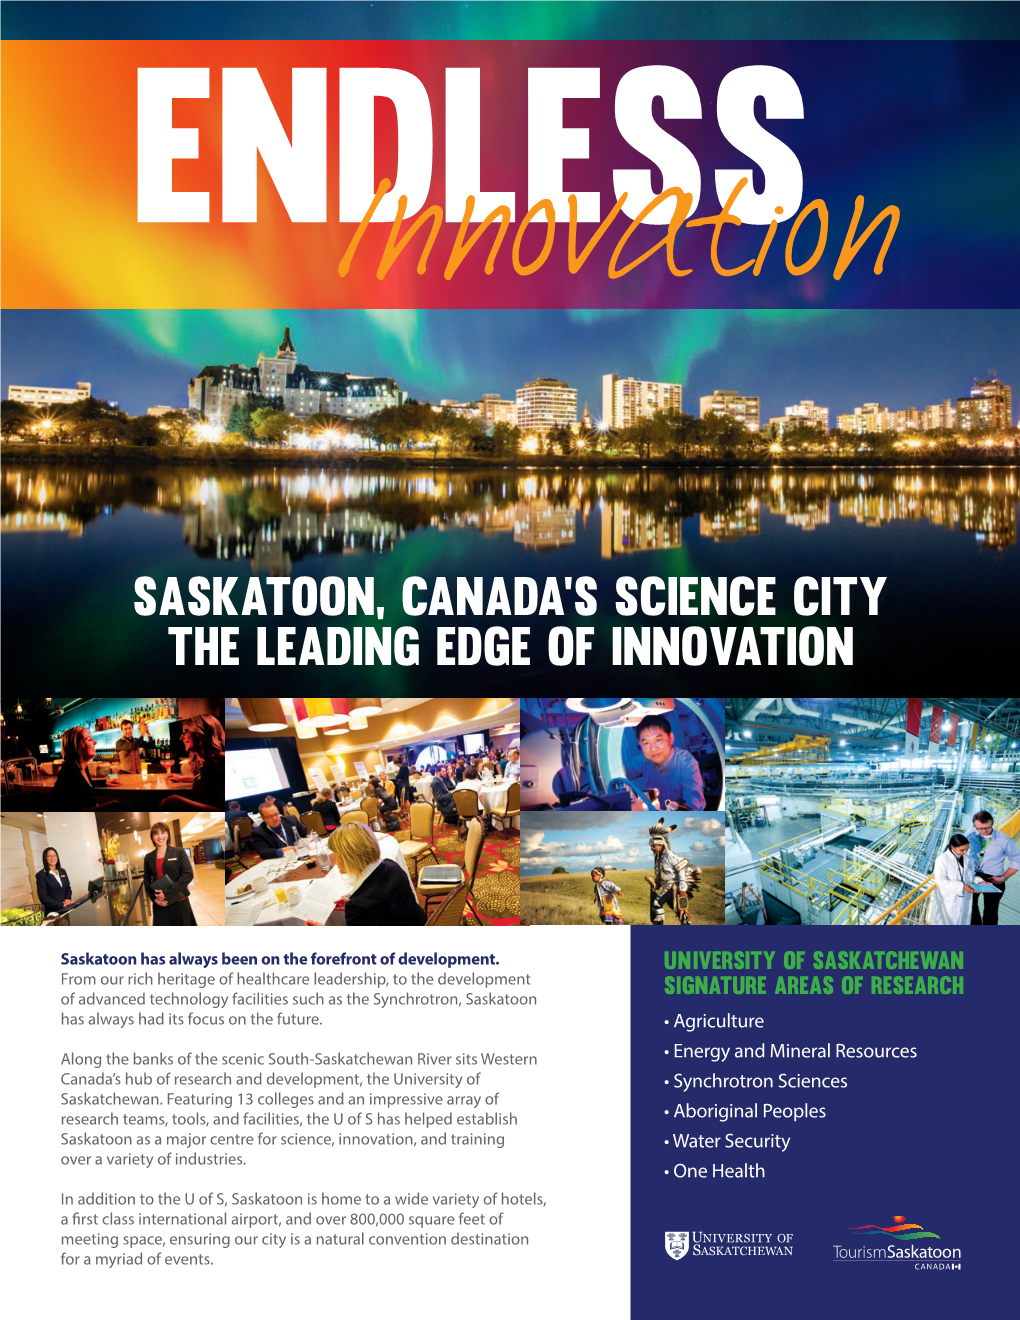 Saskatoon, Canada's Science City the Leading Edge of Innovation